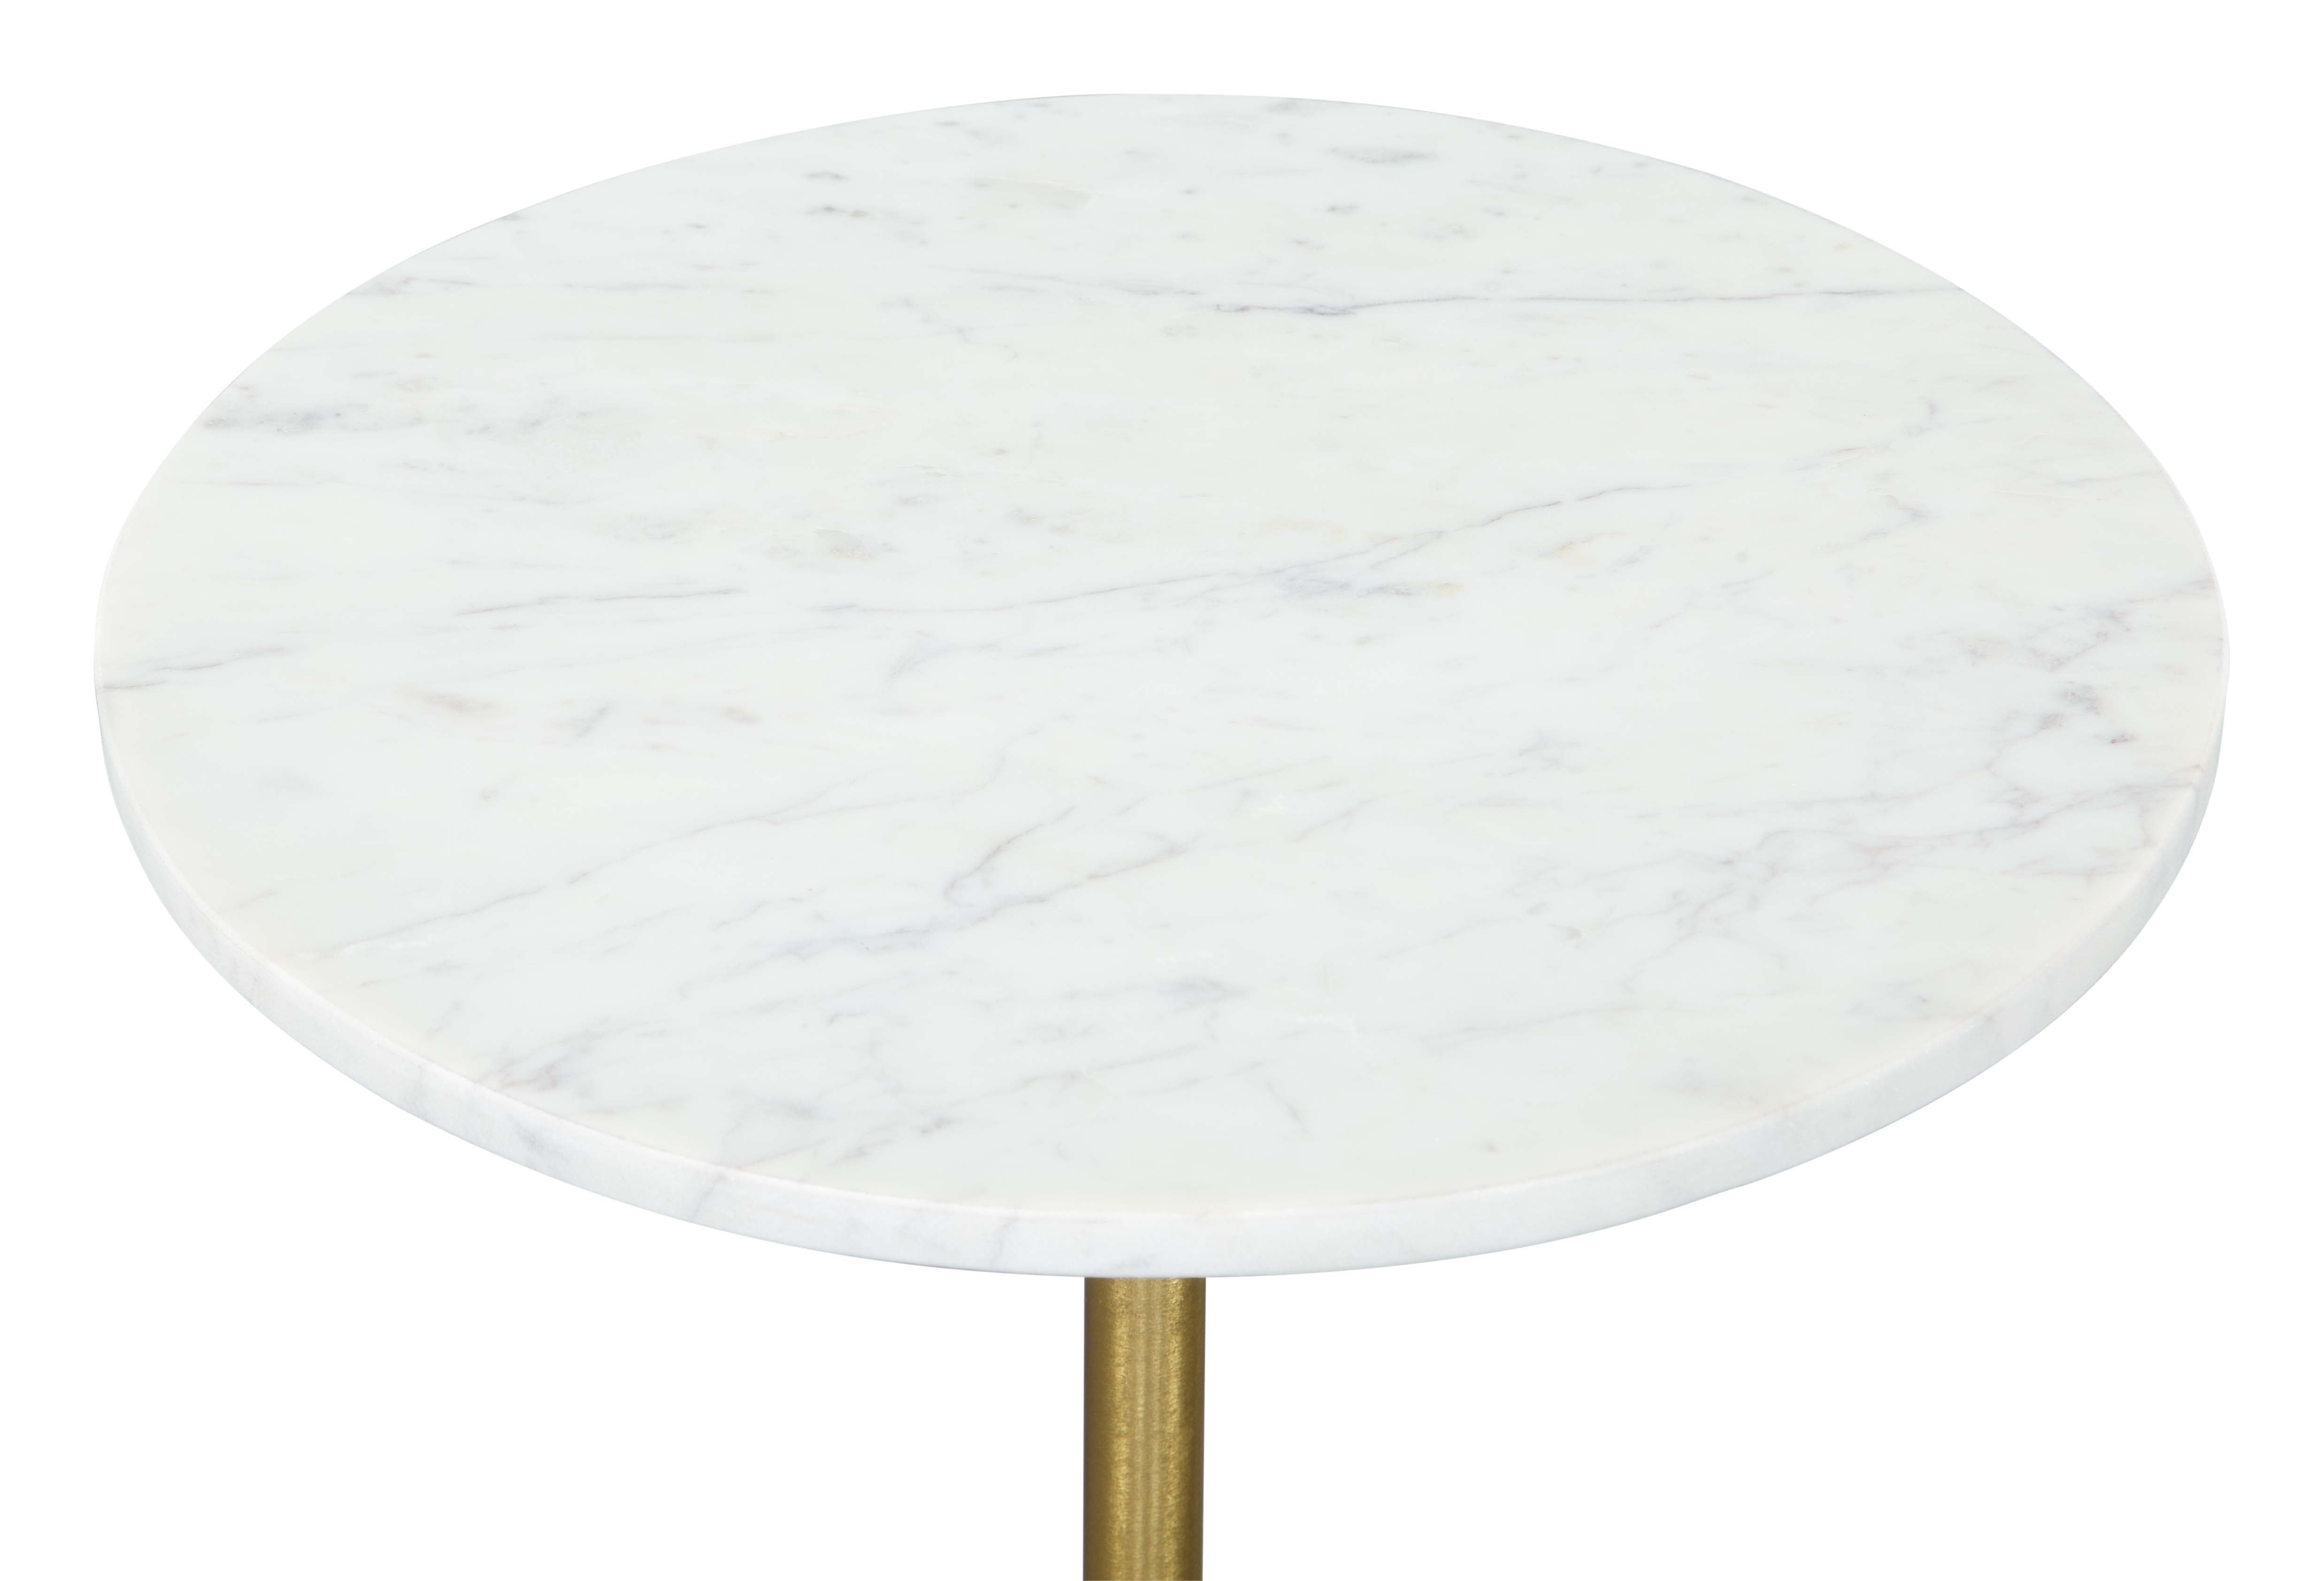 Cynthia - Side Table - White & Gold